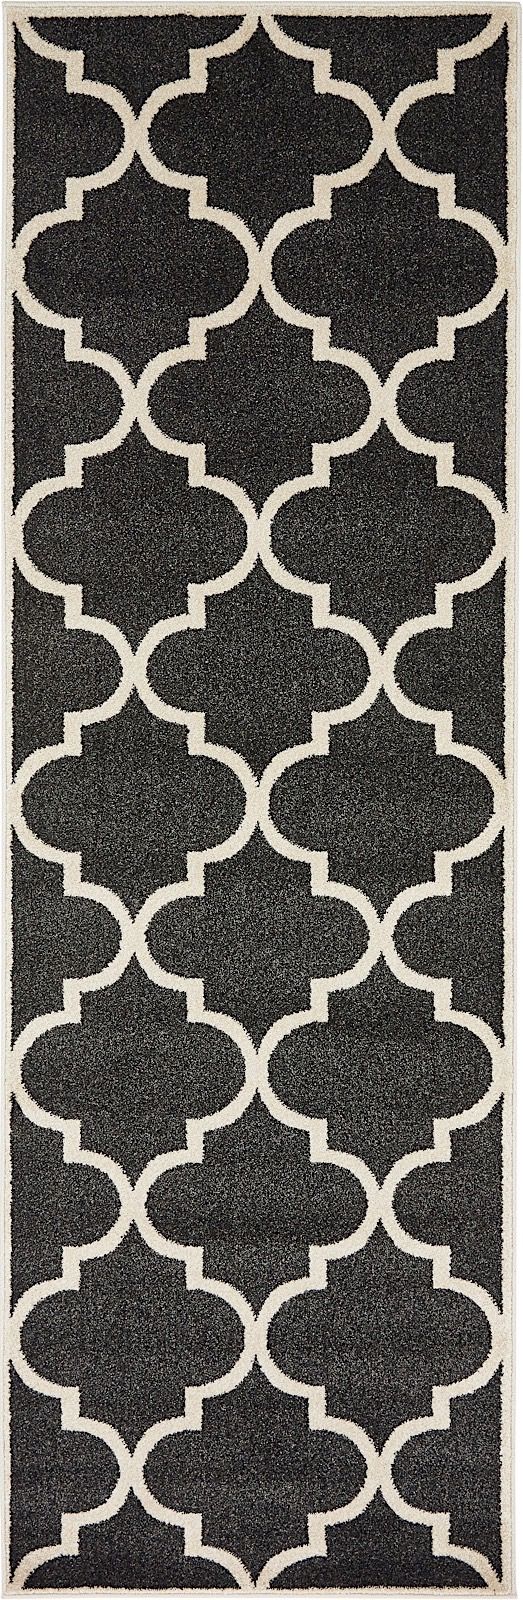 theodora contemporary area rug collection